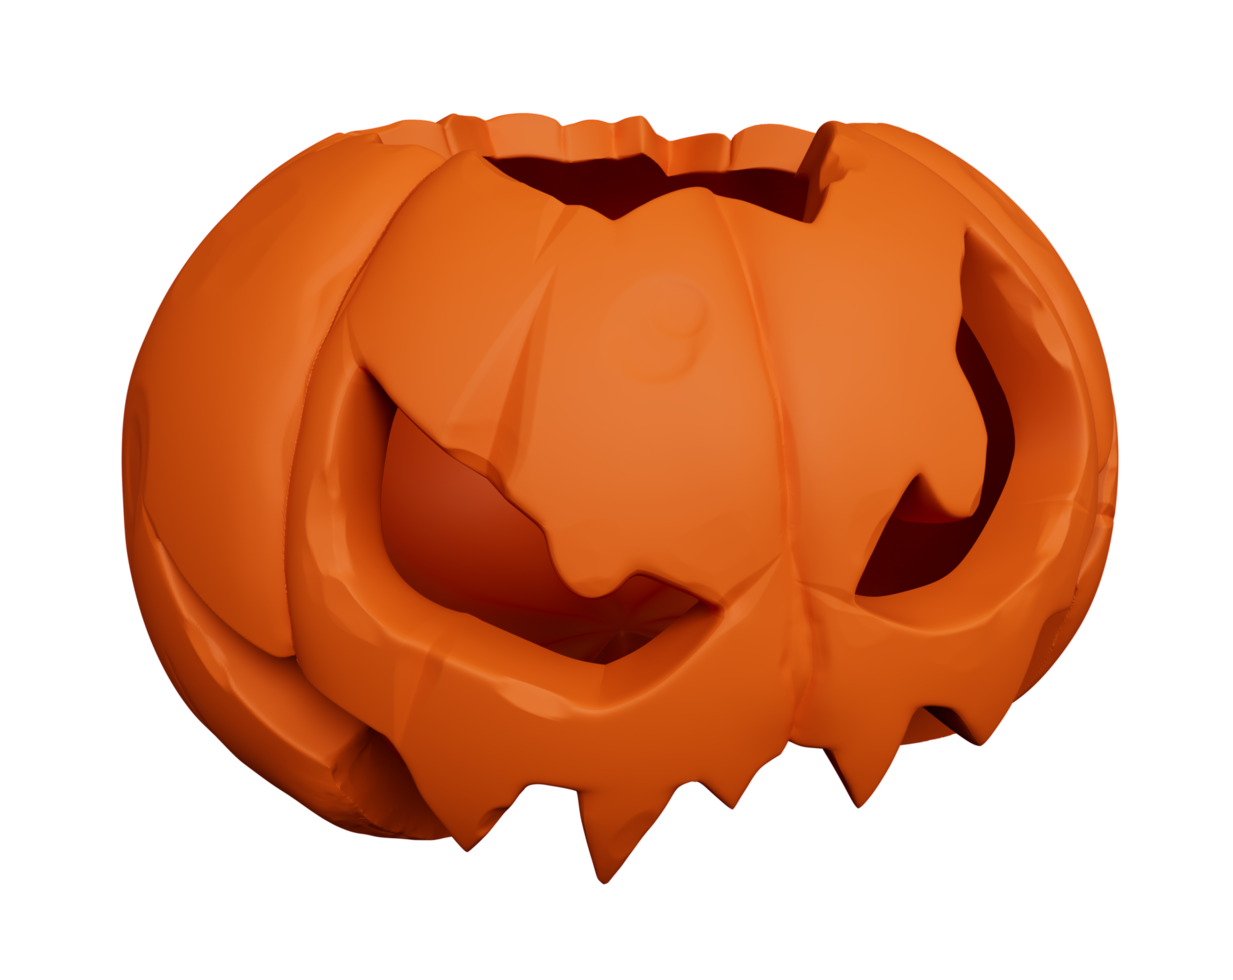 3d rendering of Halloween pumpkin side view minimal Halloween background design element png